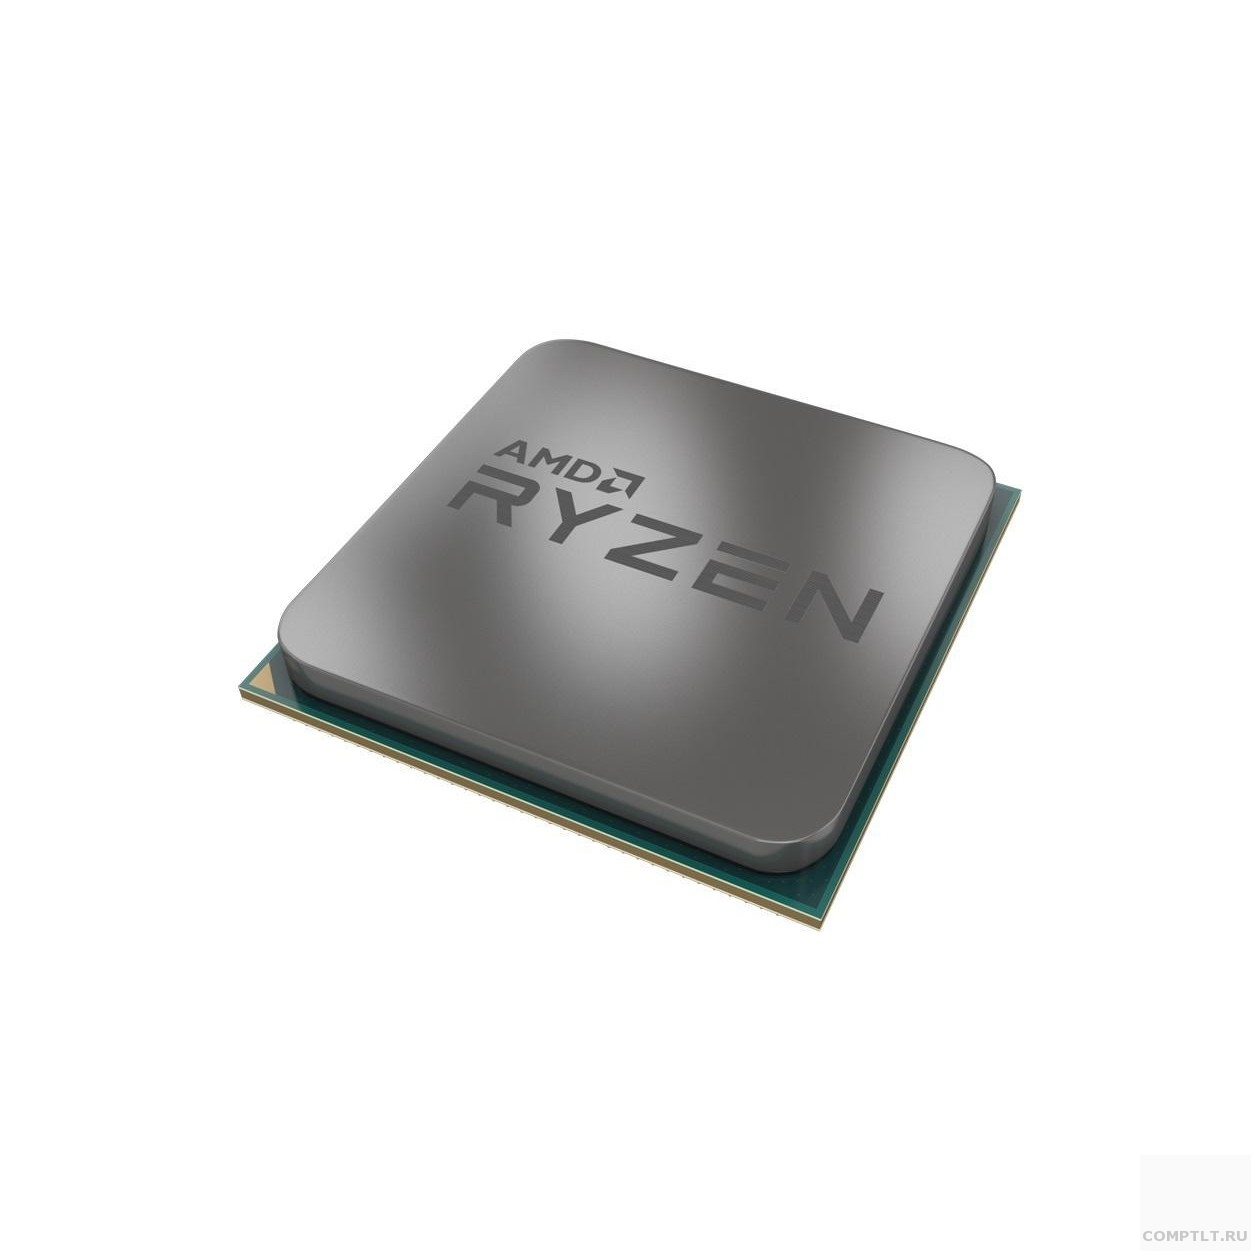  AMD Ryzen 5 2400G OEM 3.9GHz, 4MB, 65W, AM4, RX Vega Graphics